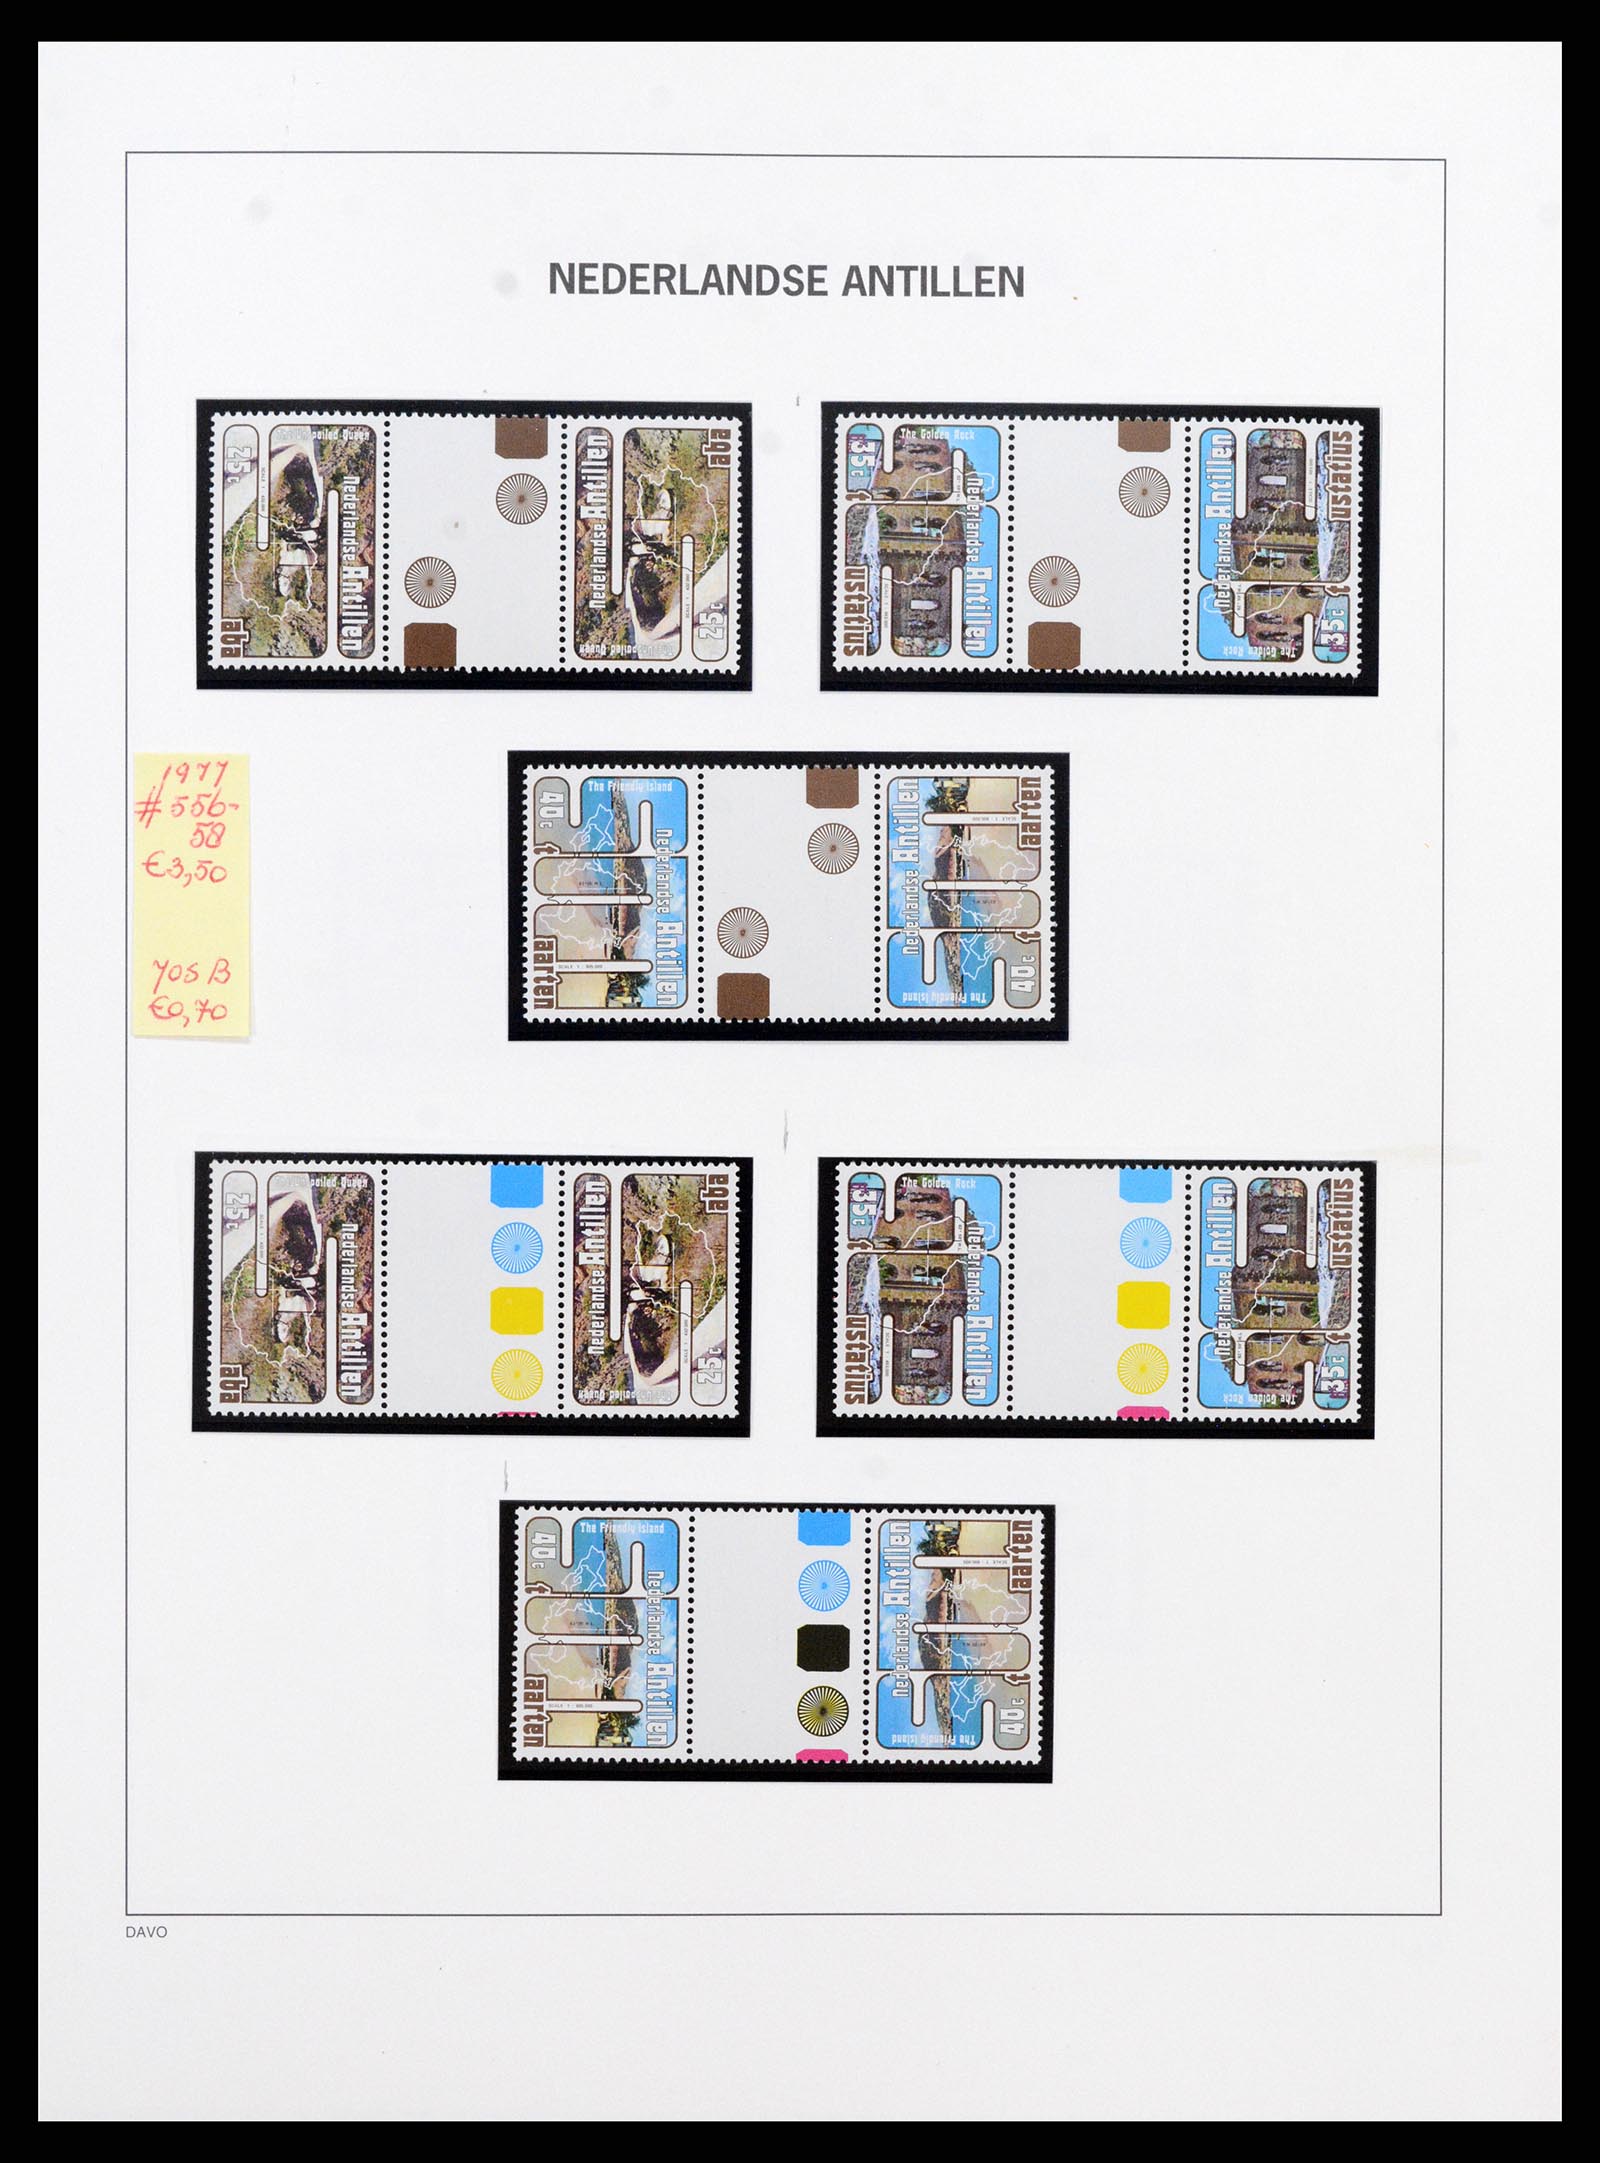 37682 058 - Stamp collection 37682 Netherlands Antilles.